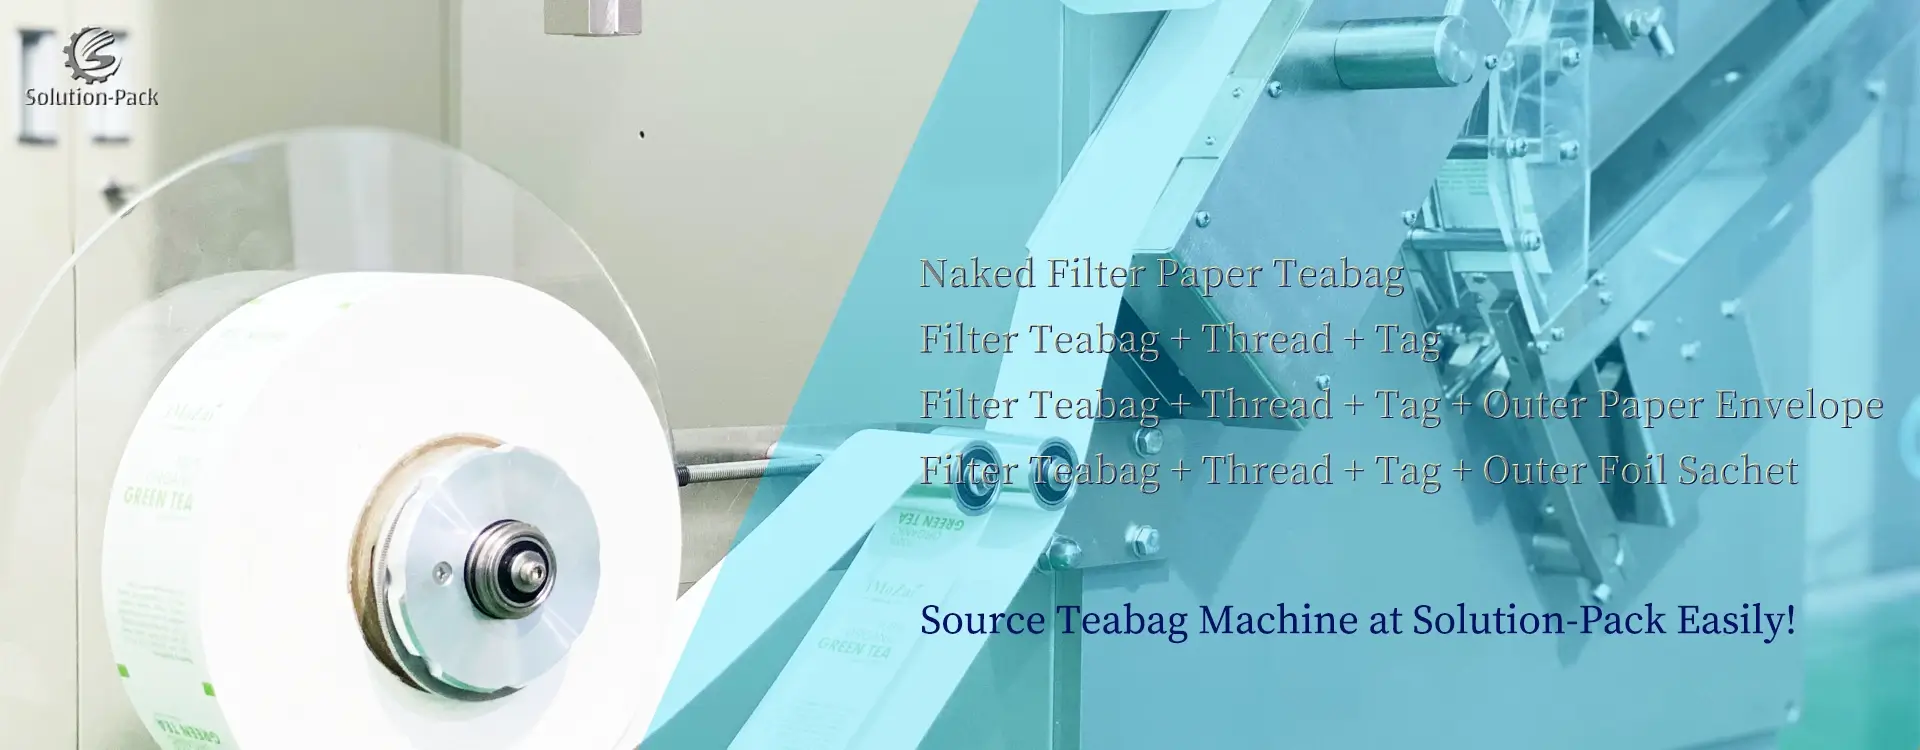 Filter Paper Teabag Packaging Machine | Solution-Pack